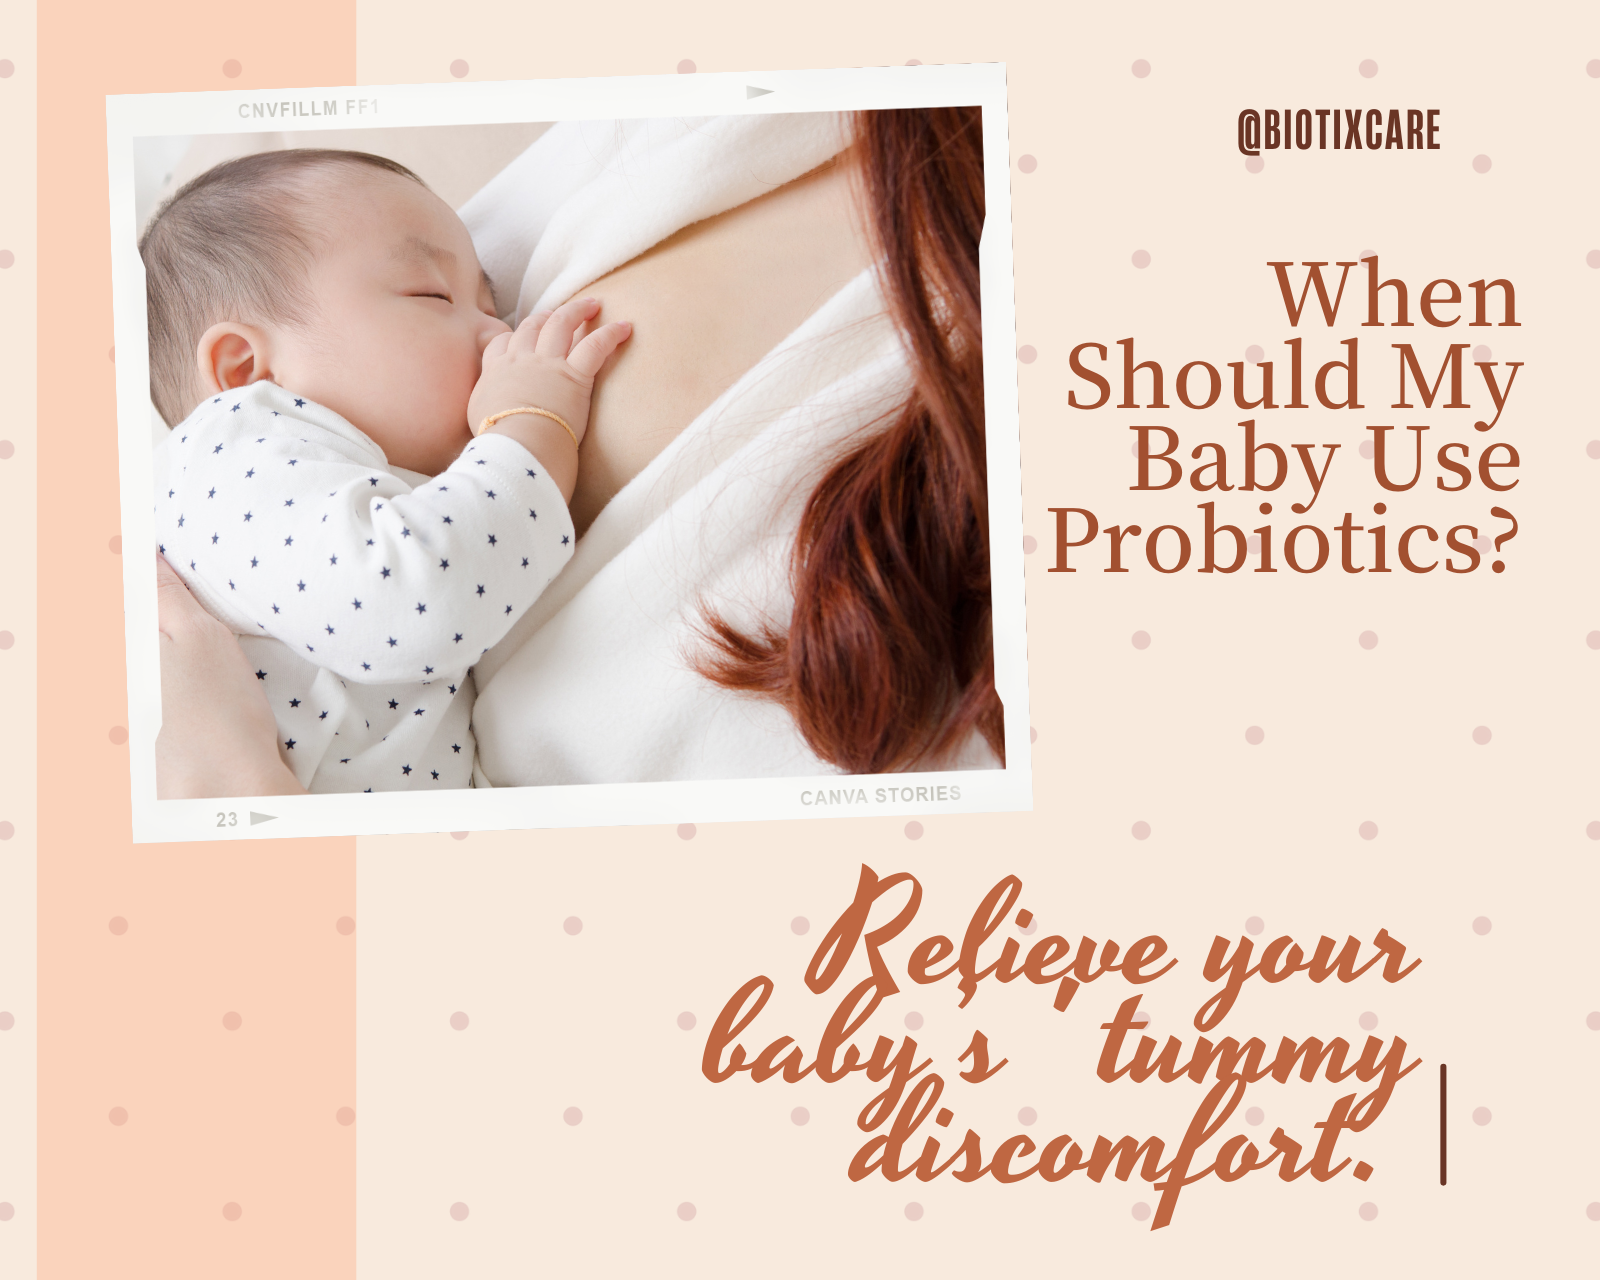 When Should My Baby Use Probiotics?